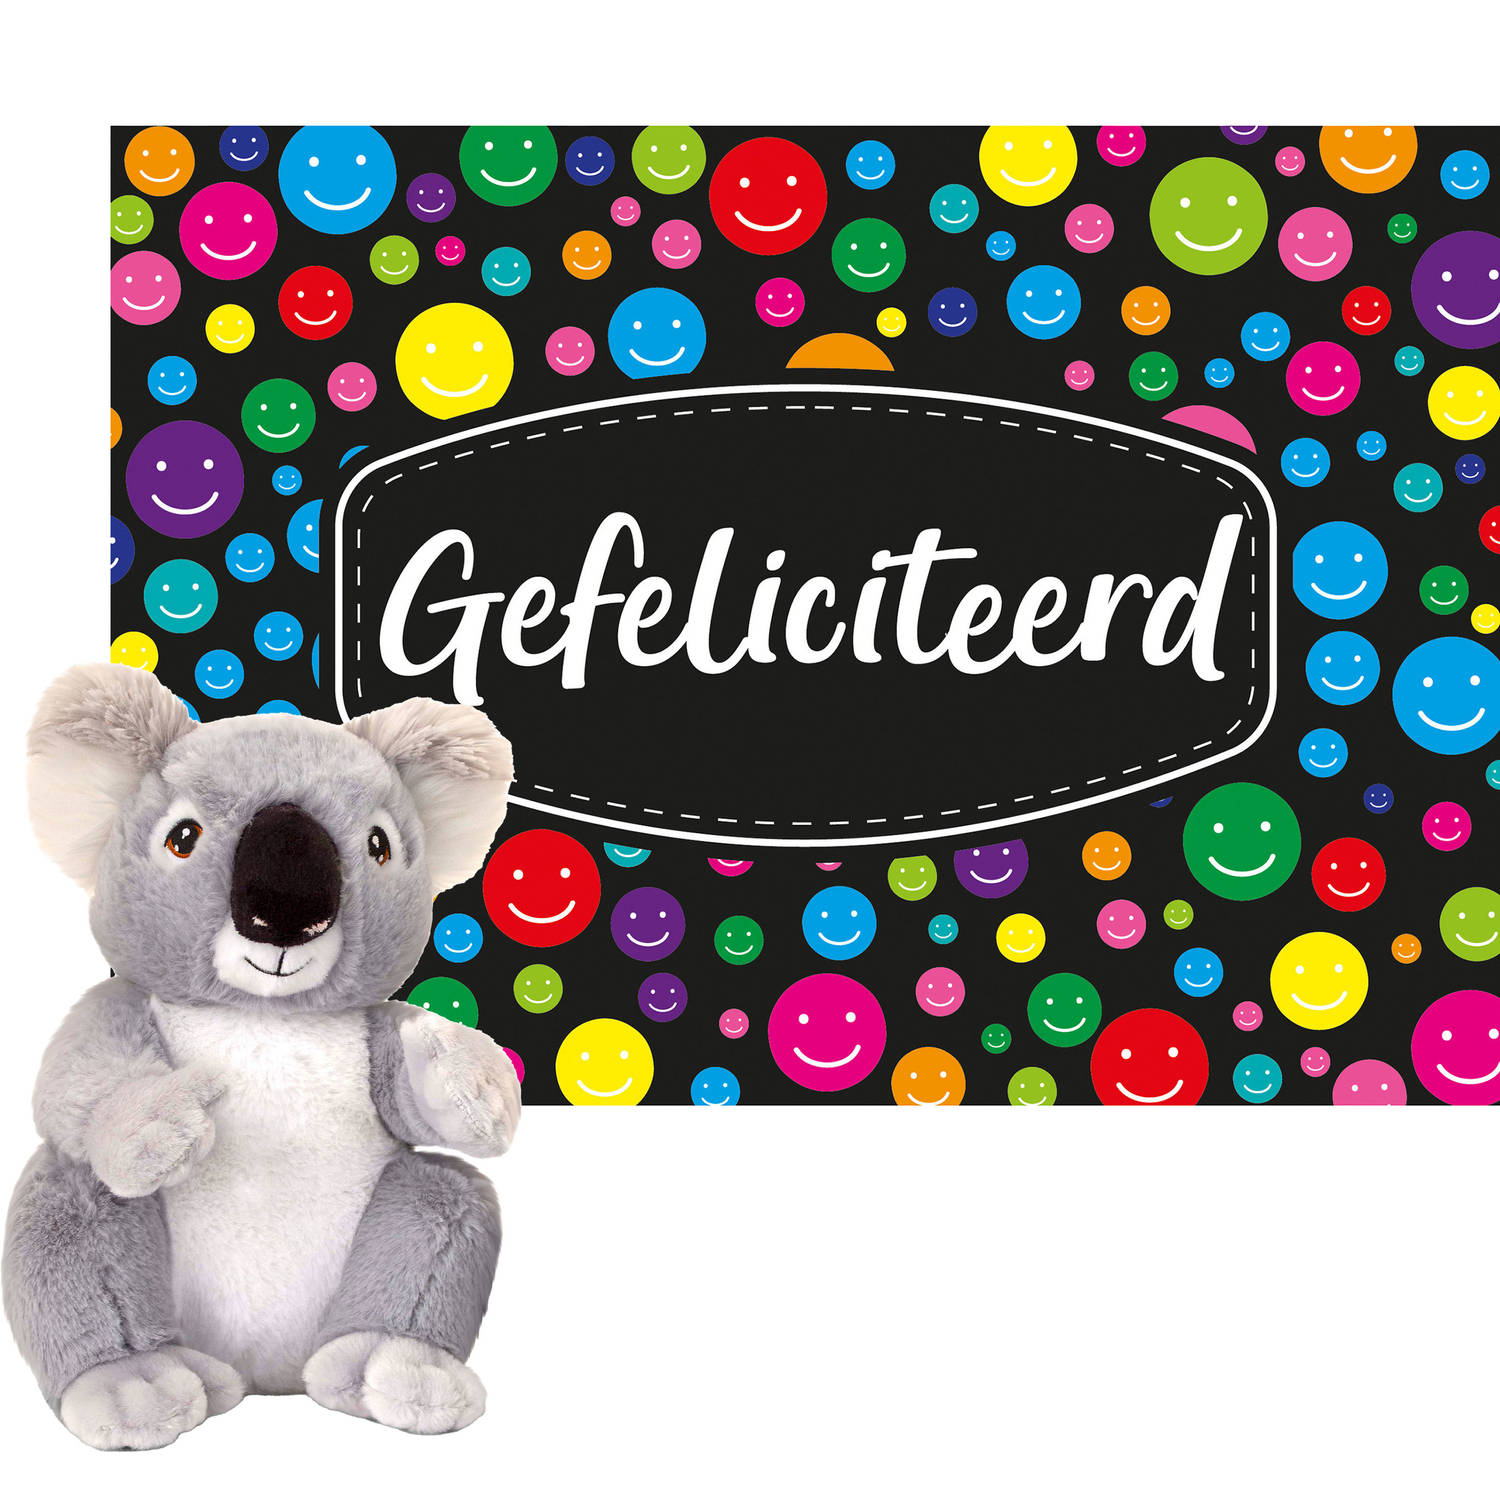 Keel toys Cadeaukaart Gefeliciteerd met knuffeldier koala 18 cm Knuffeldier